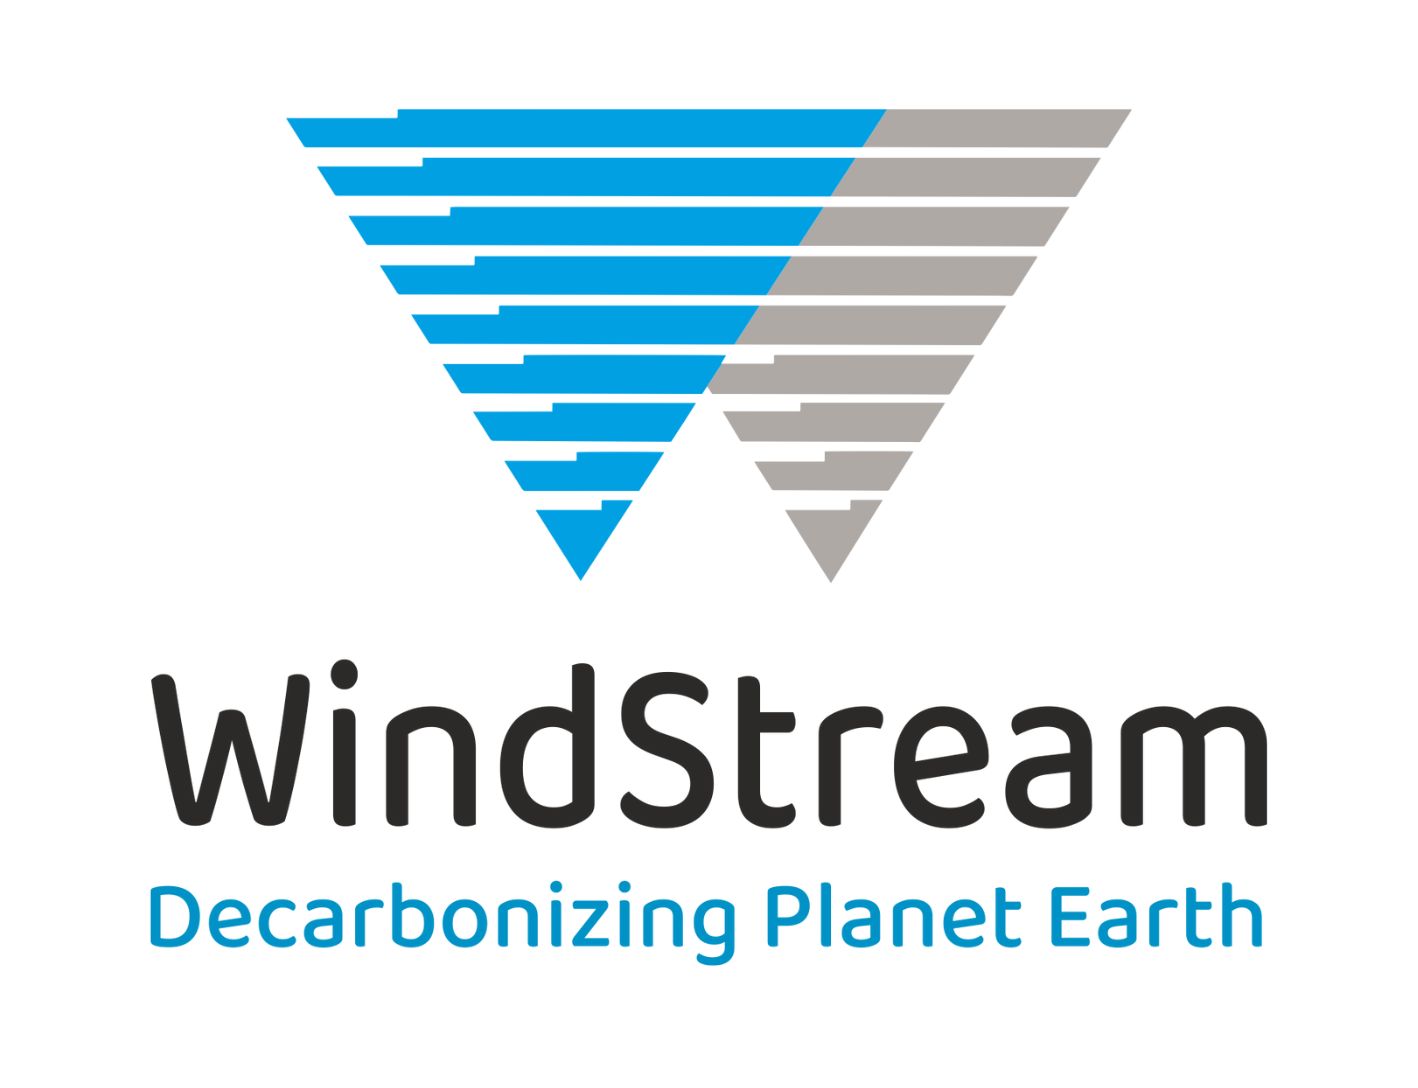 WindStream Energy Technologies